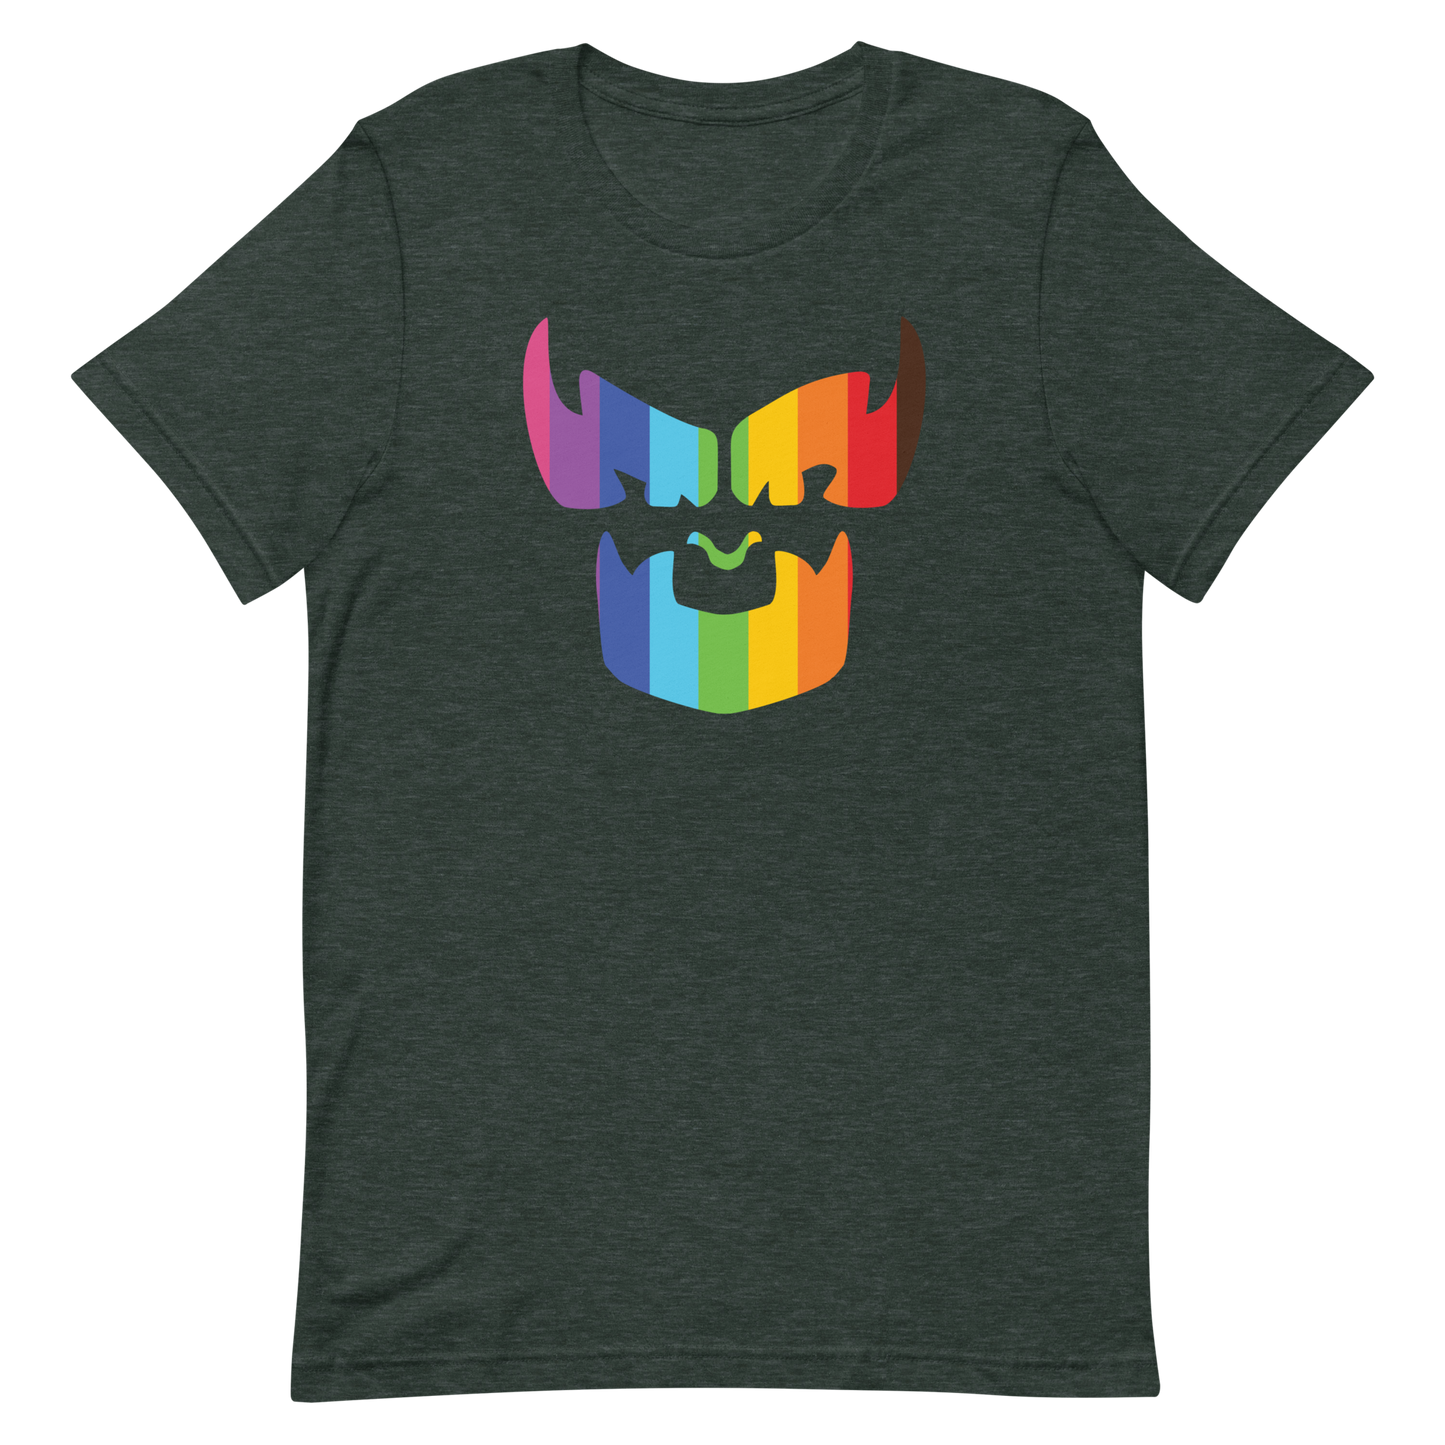 Grunk Pride T-Shirt